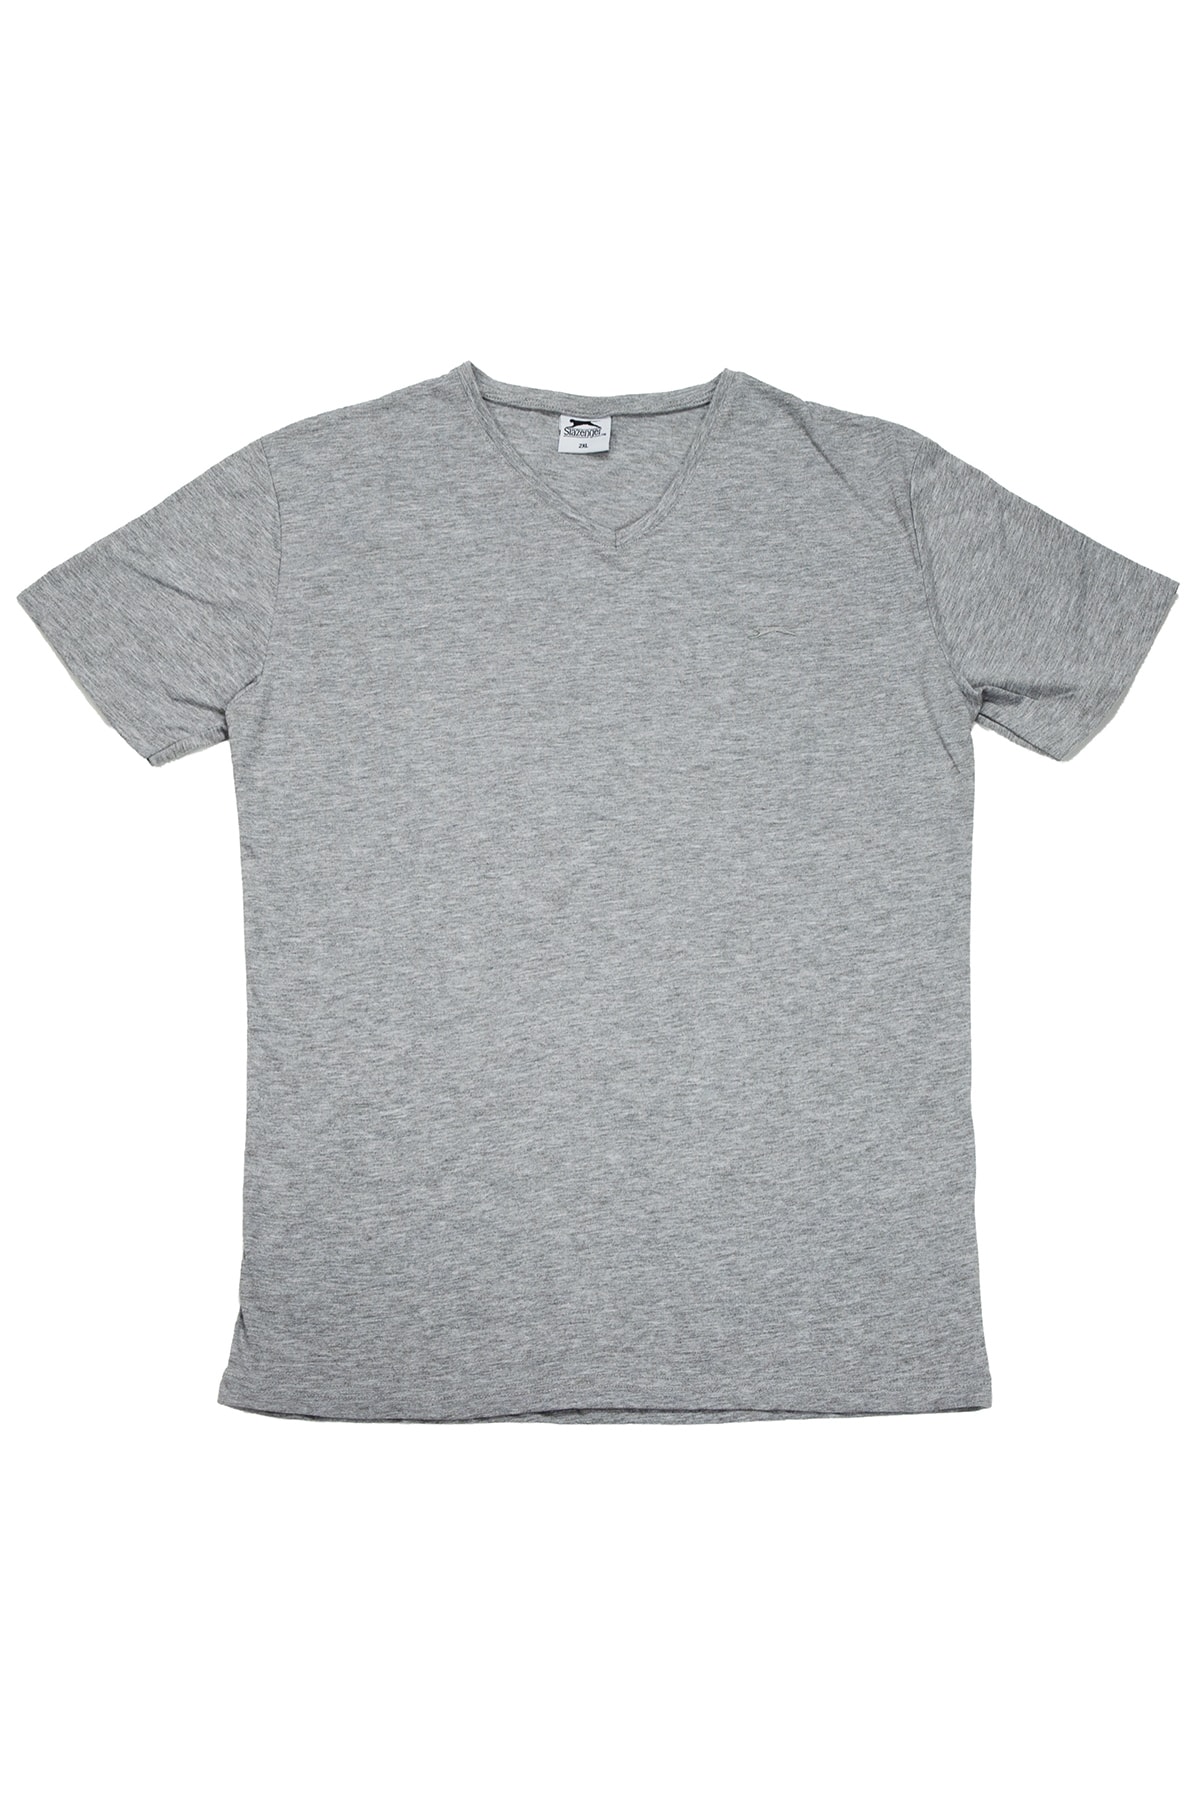 Slazenger Sargon Men's Plus Size Polo T-shirt, Gray